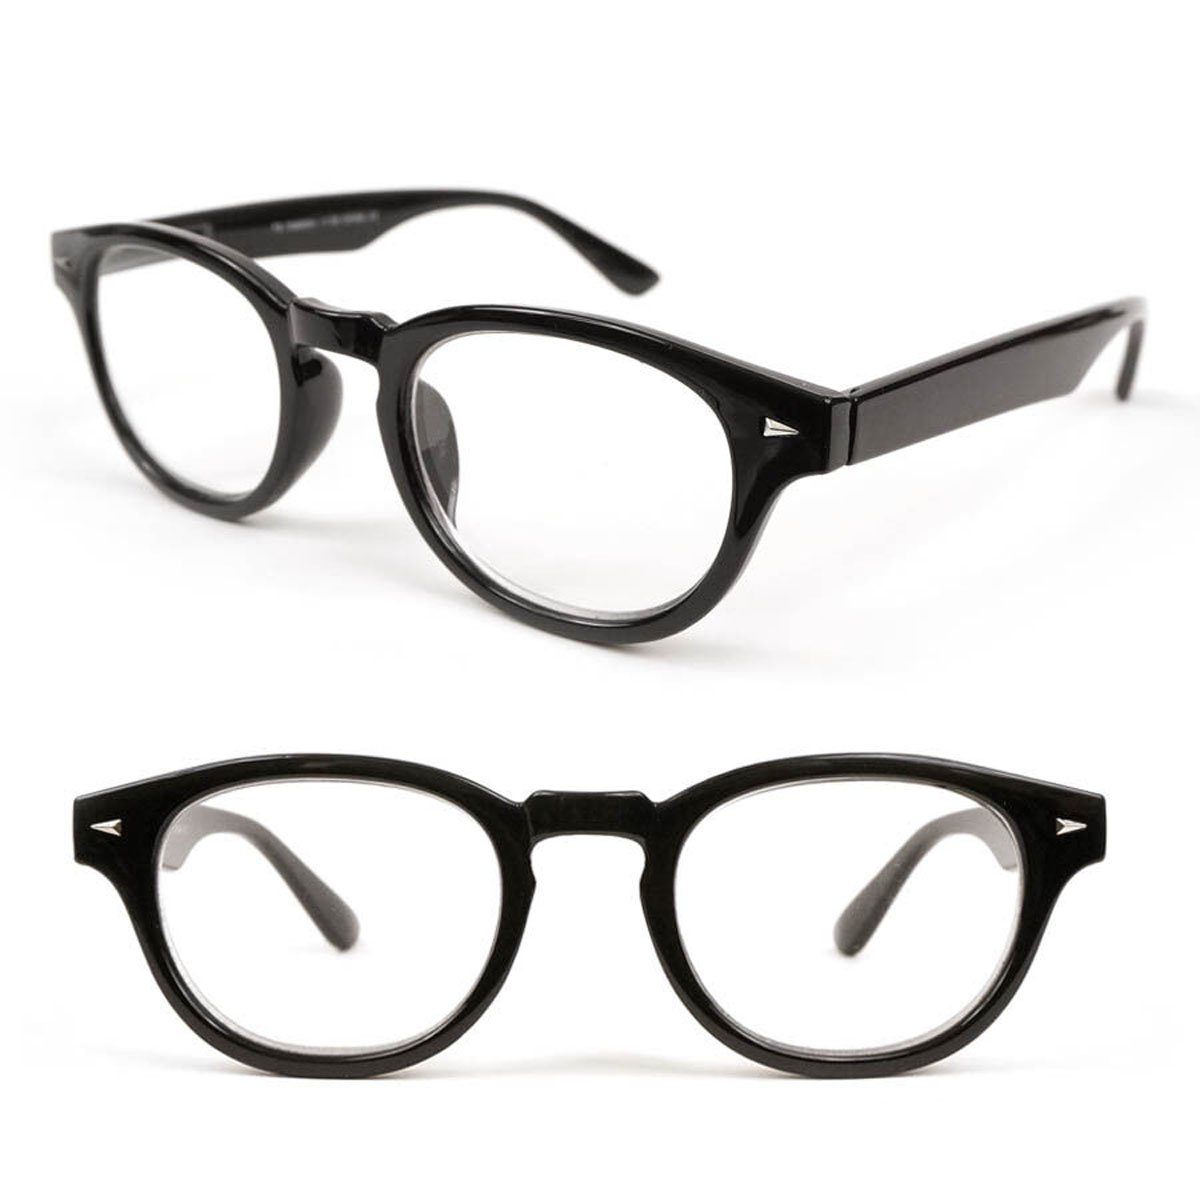 Medium Round Classic Frame Reading Glasses Geek Retro Vintage Style 100-375 - Black, +3.00